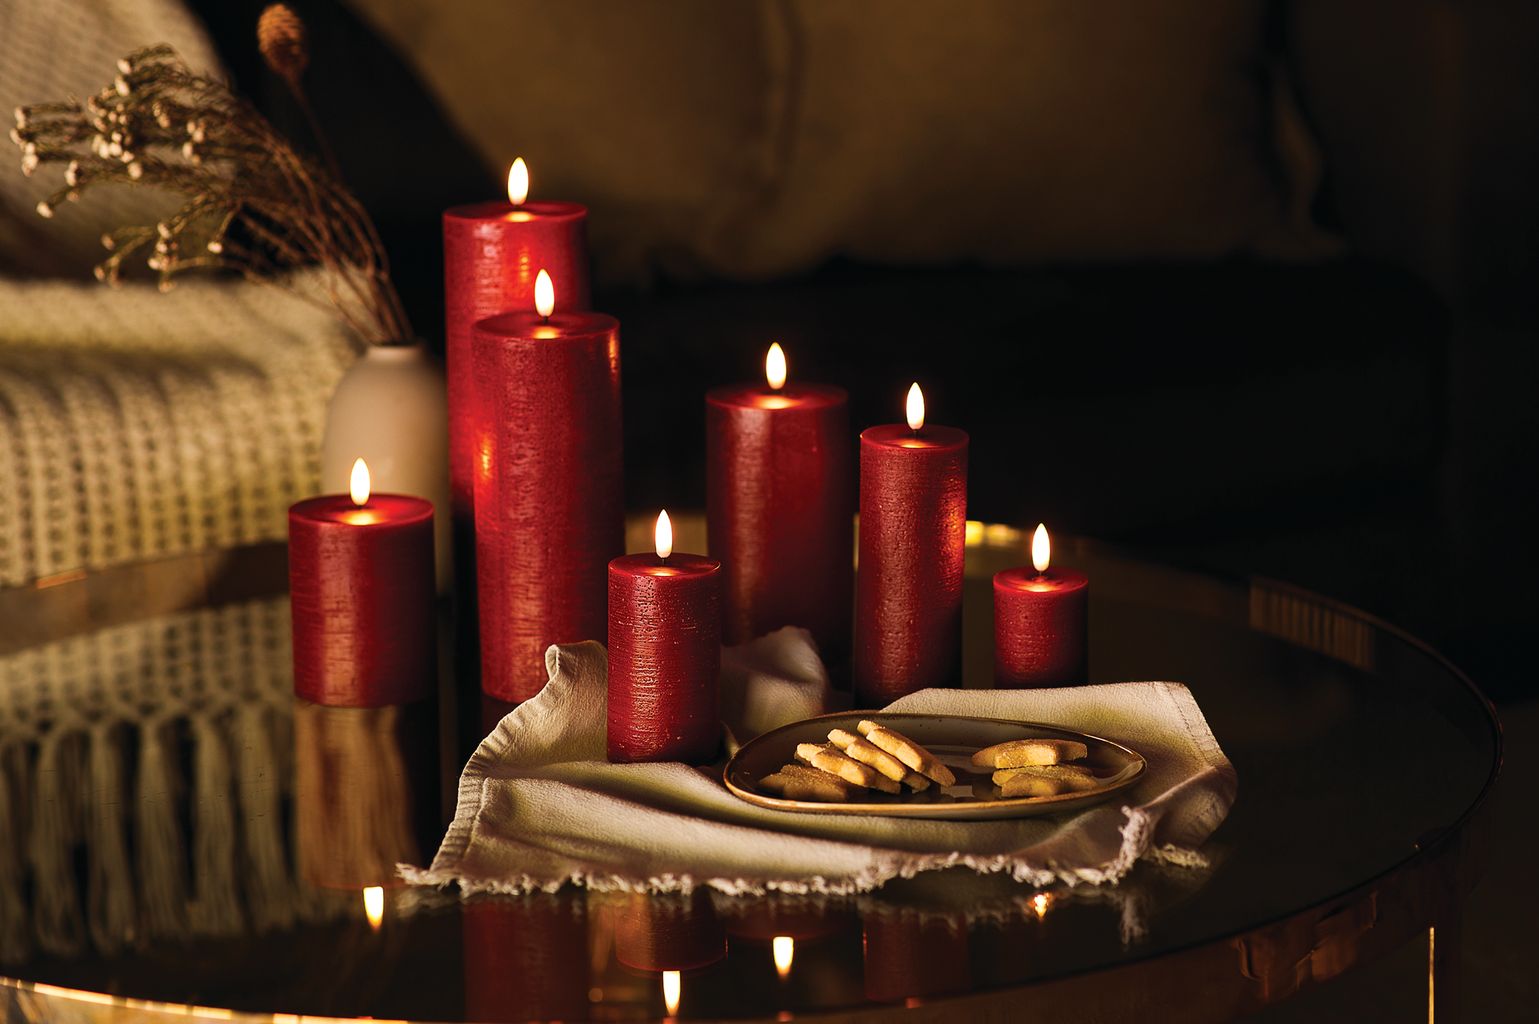 Uyuni Lighting Led Pillar Candle 3 D Flame øx H 5,8x10,1 Cm, Carmine Red